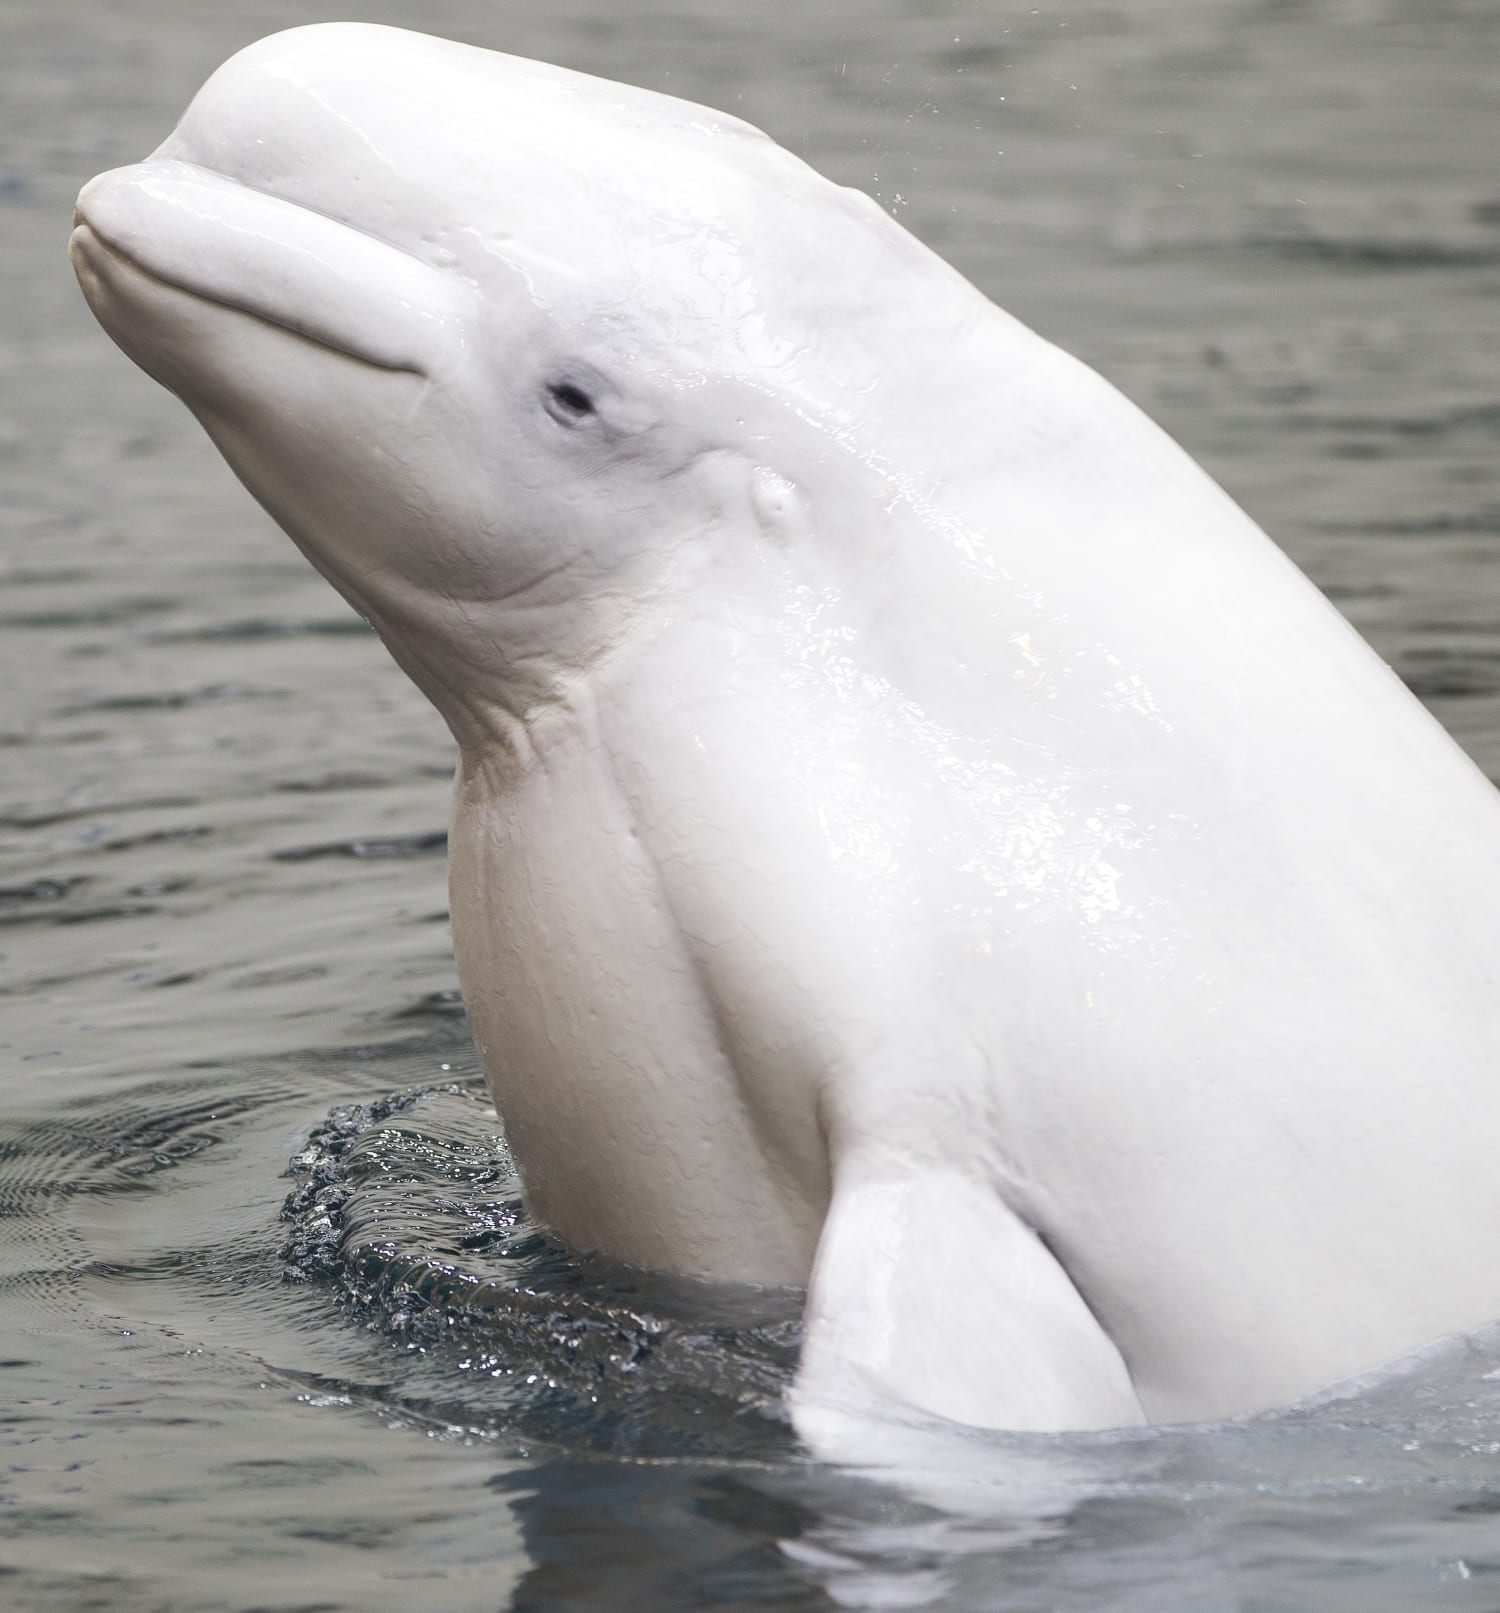 Ceta Base - Maris, a beluga, died on October 22nd, 2015 at